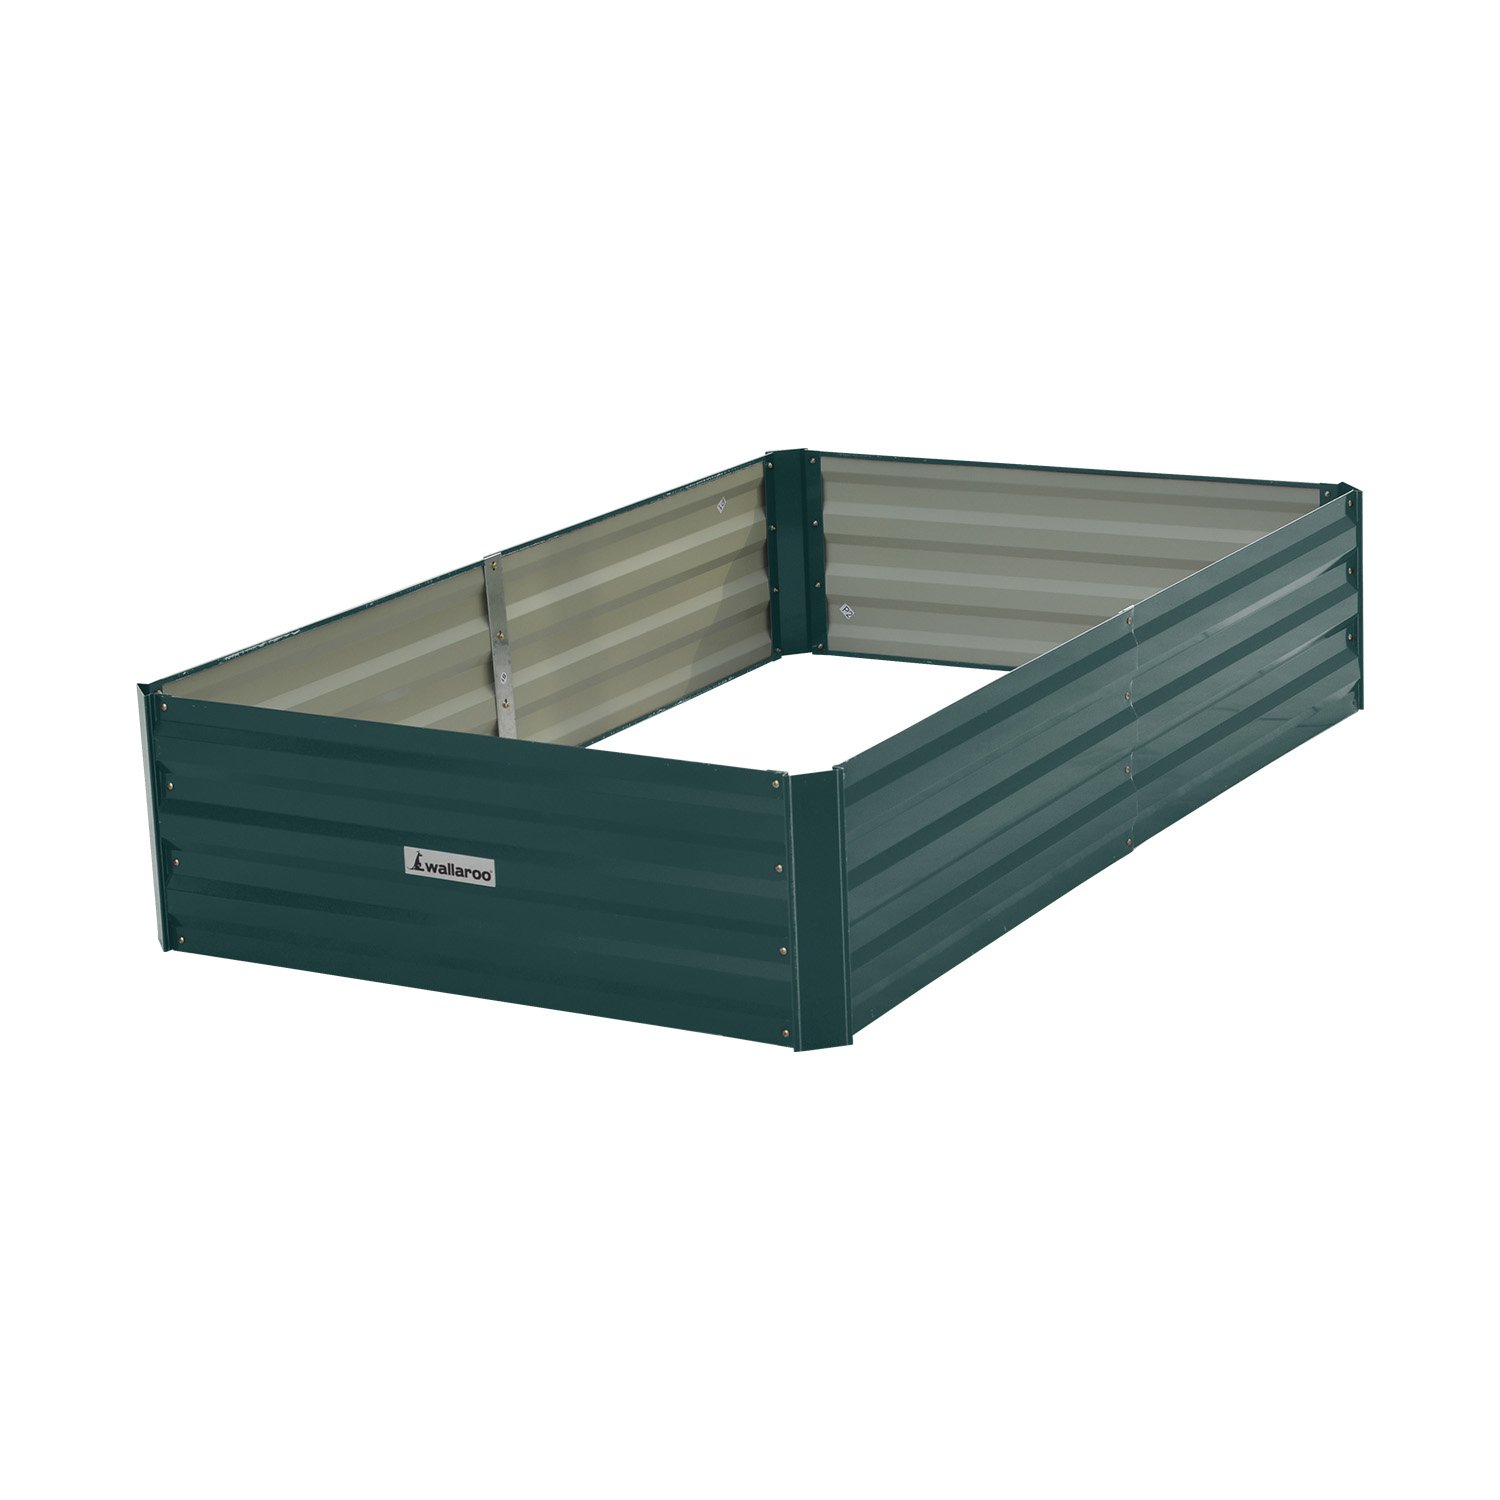 Wallaroo Garden Bed 150 x 90 x 30cm Galvanized Steel - Green 2